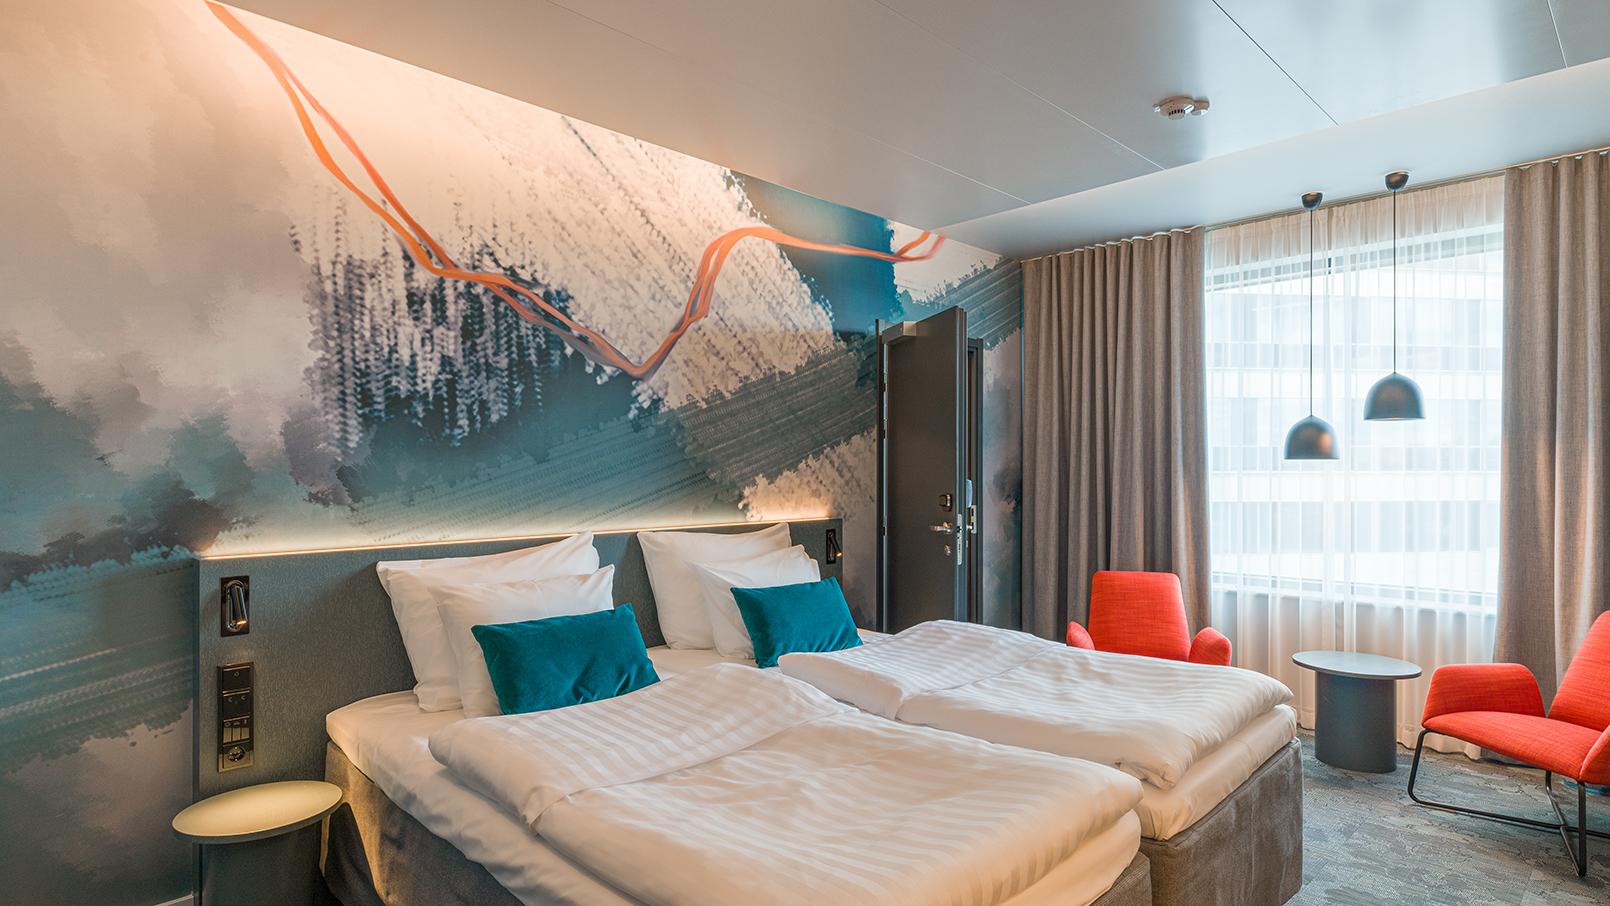 Rune & Berg Designin suunnittelema hotellihuone Sokos Hotelli Flamingolle